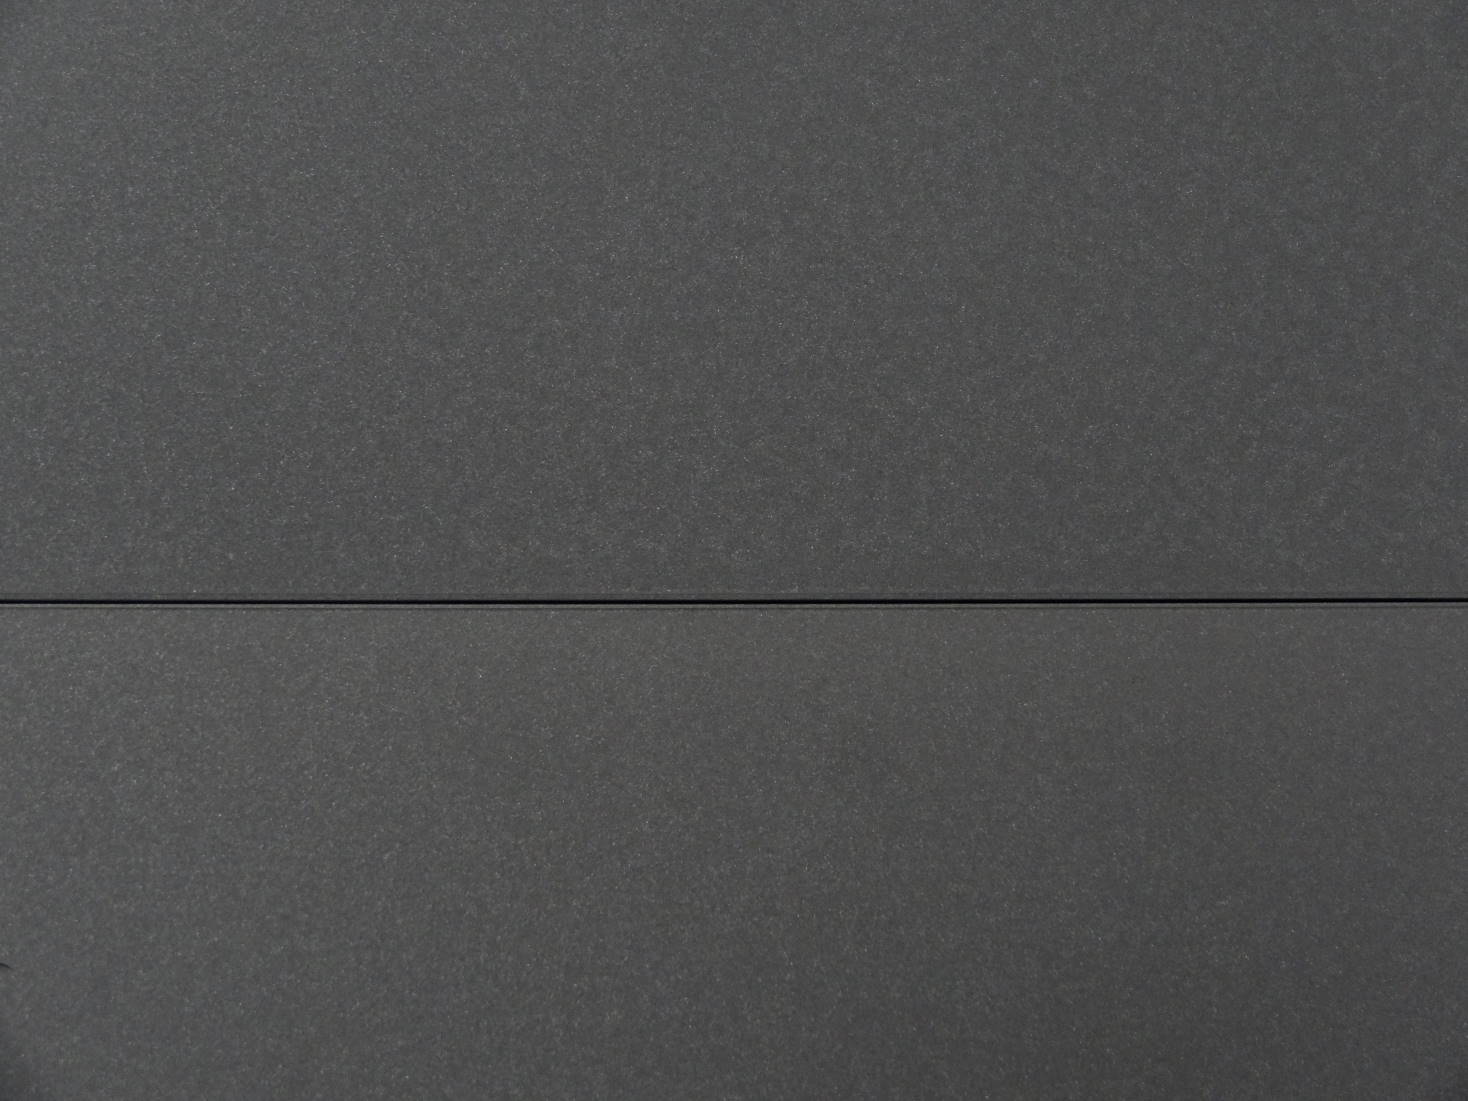 Surface 3 専用裏面保護シートのキックスタンド部分